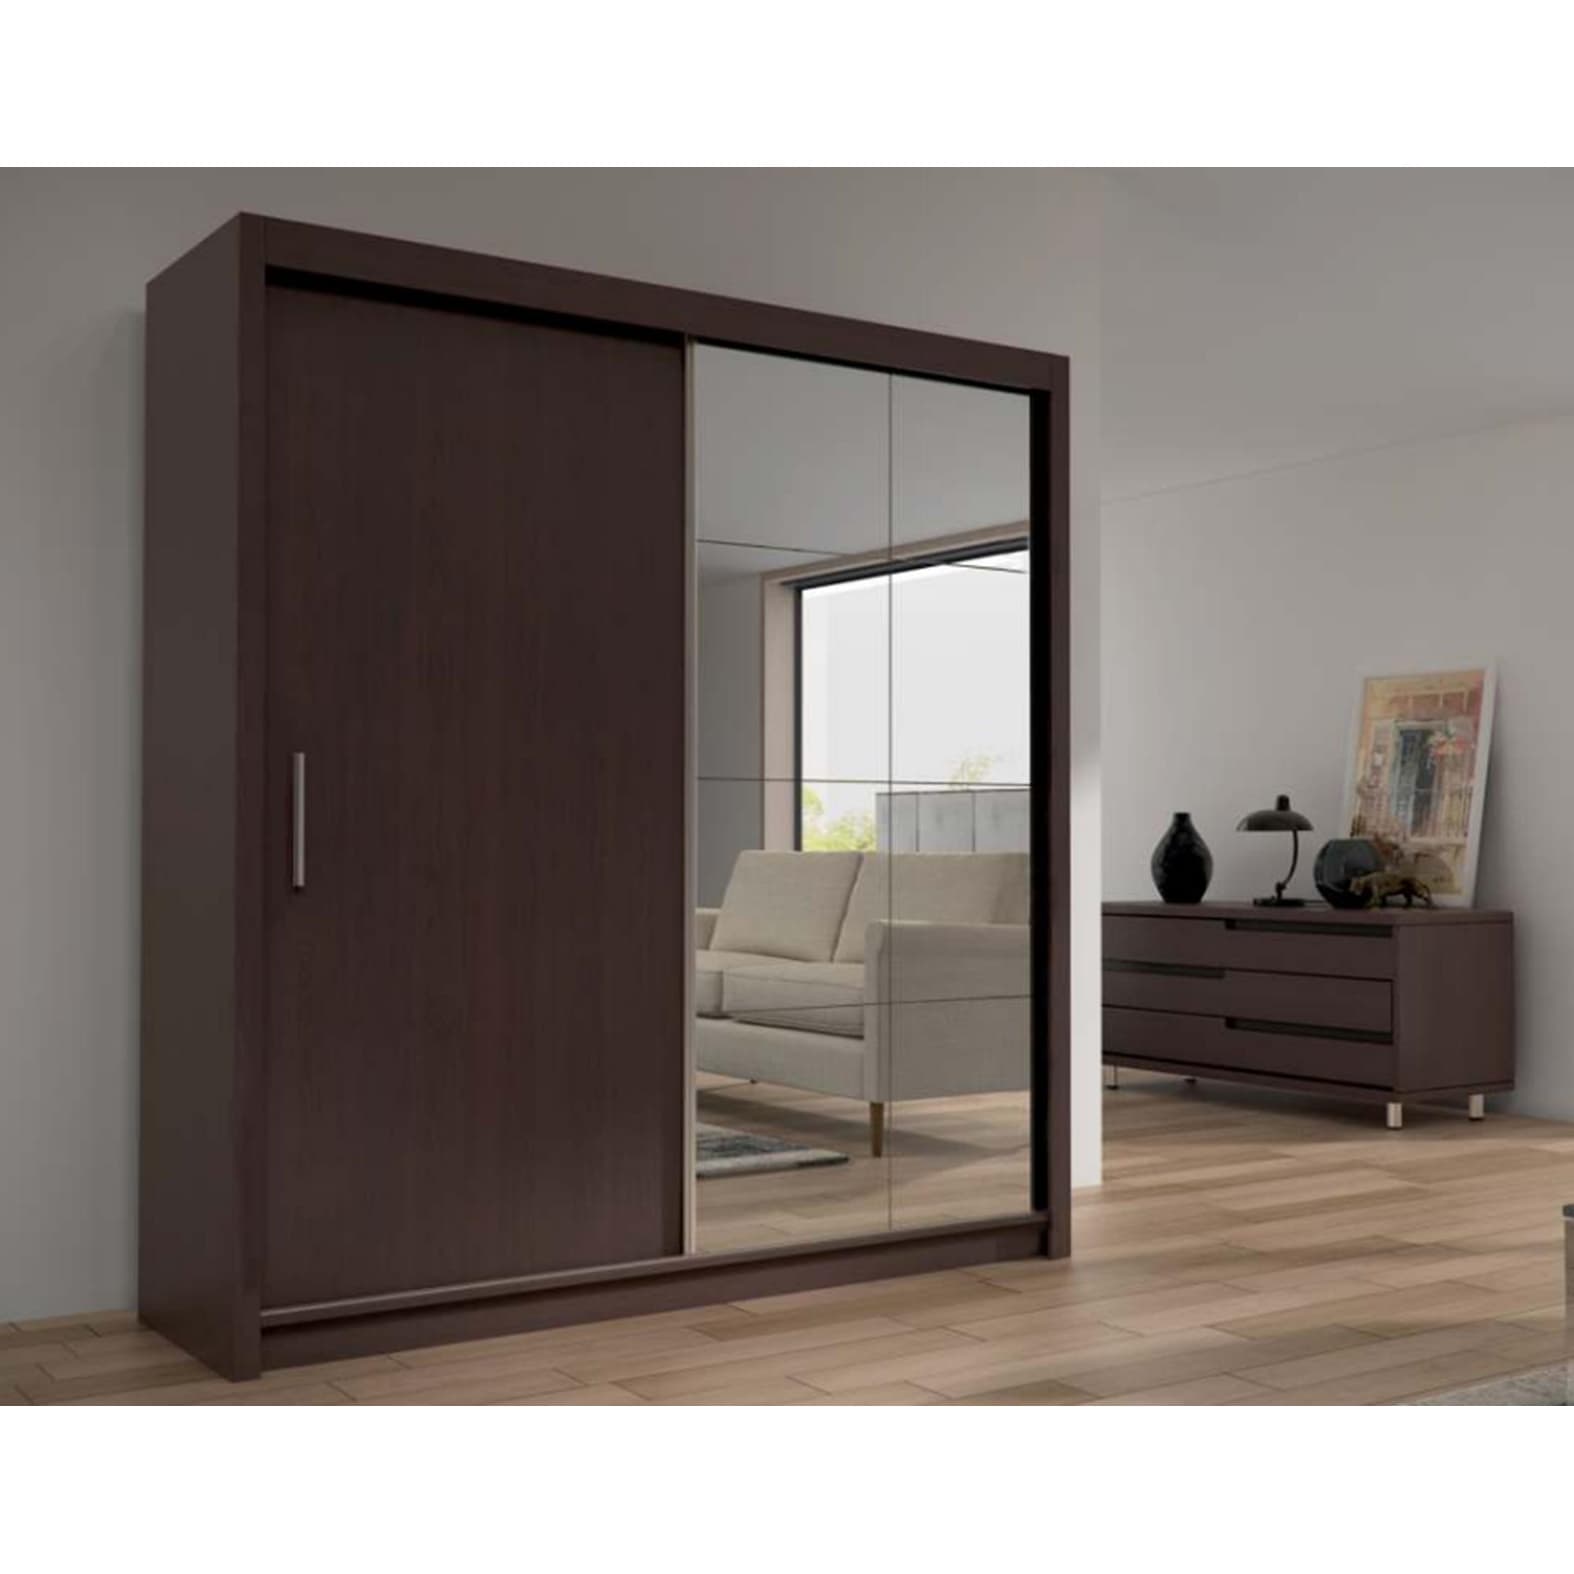 Cedar 2 Door Solid Wood Modern Wardrobe Armoire With Mirror Mahogany 59" Wide N/a